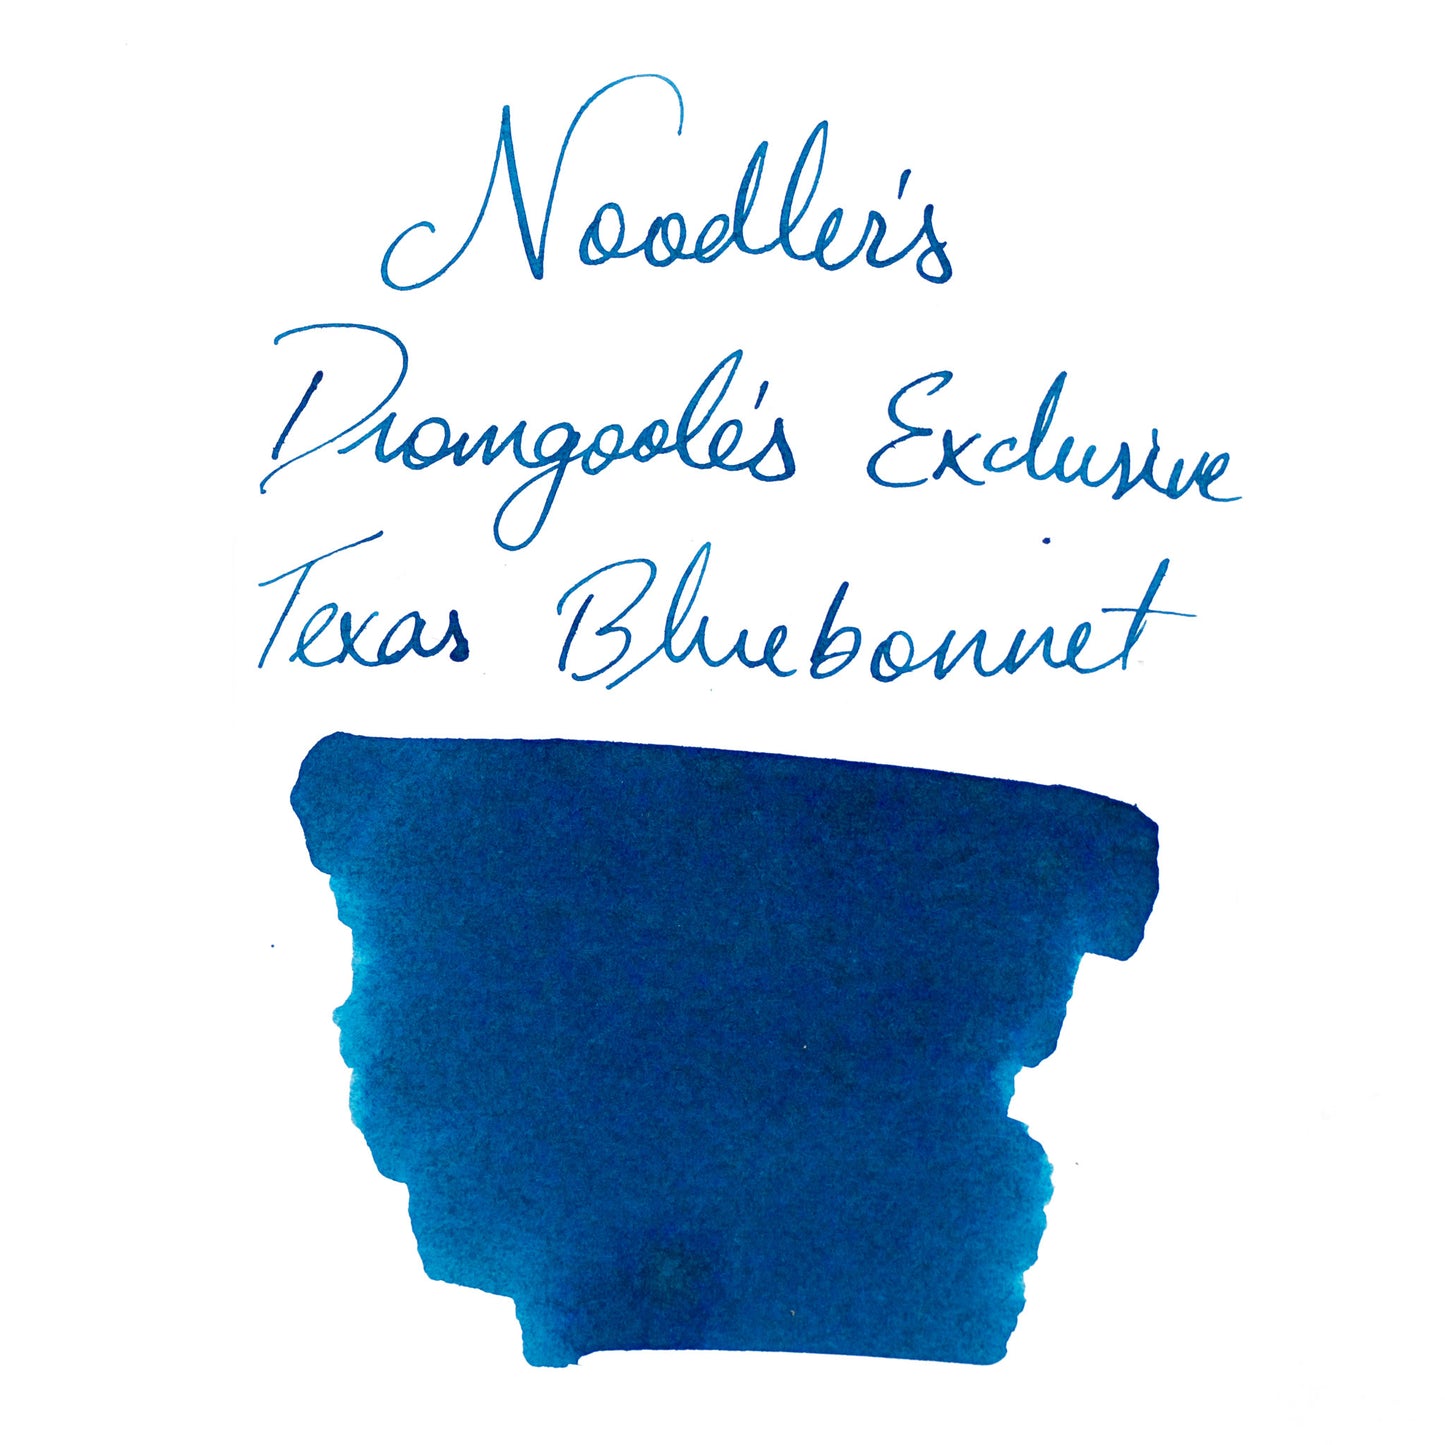 Noodler's Texas Bluebonnet Bottled Ink - Dromgoole's Exclusive